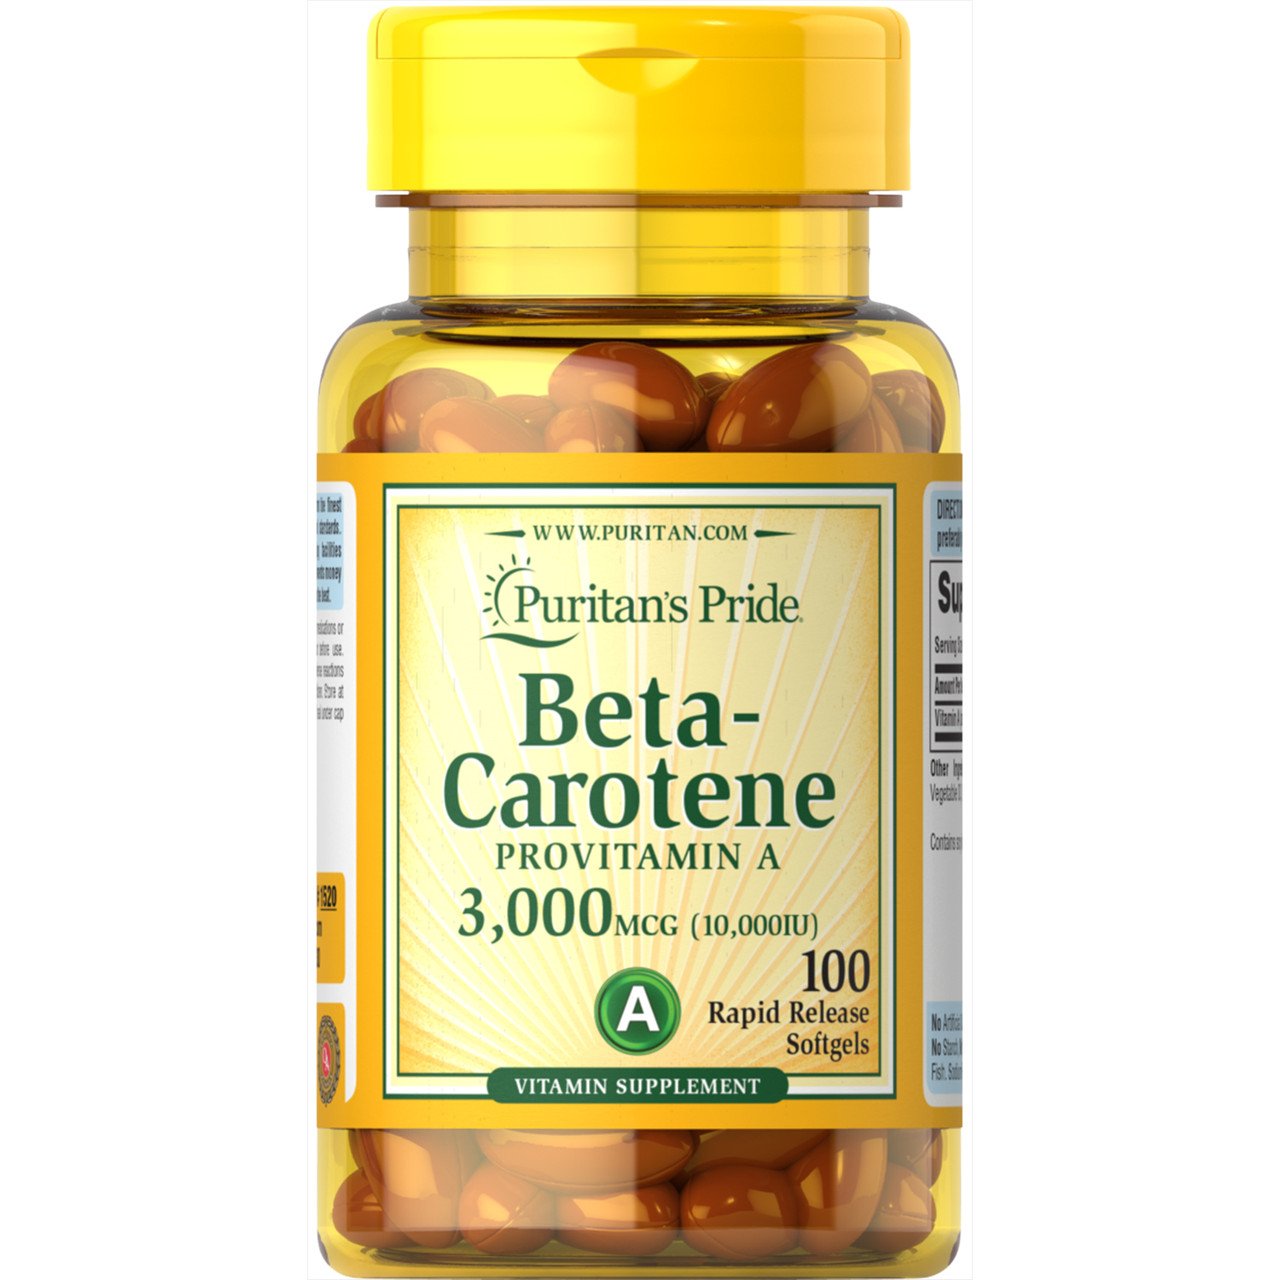 Бета-каротин Puritan's Pride Beta-Carotene Provitamin A 10000 IU 100 Softgels,  ml, Puritan's Pride. Vitamins and minerals. General Health Immunity enhancement 